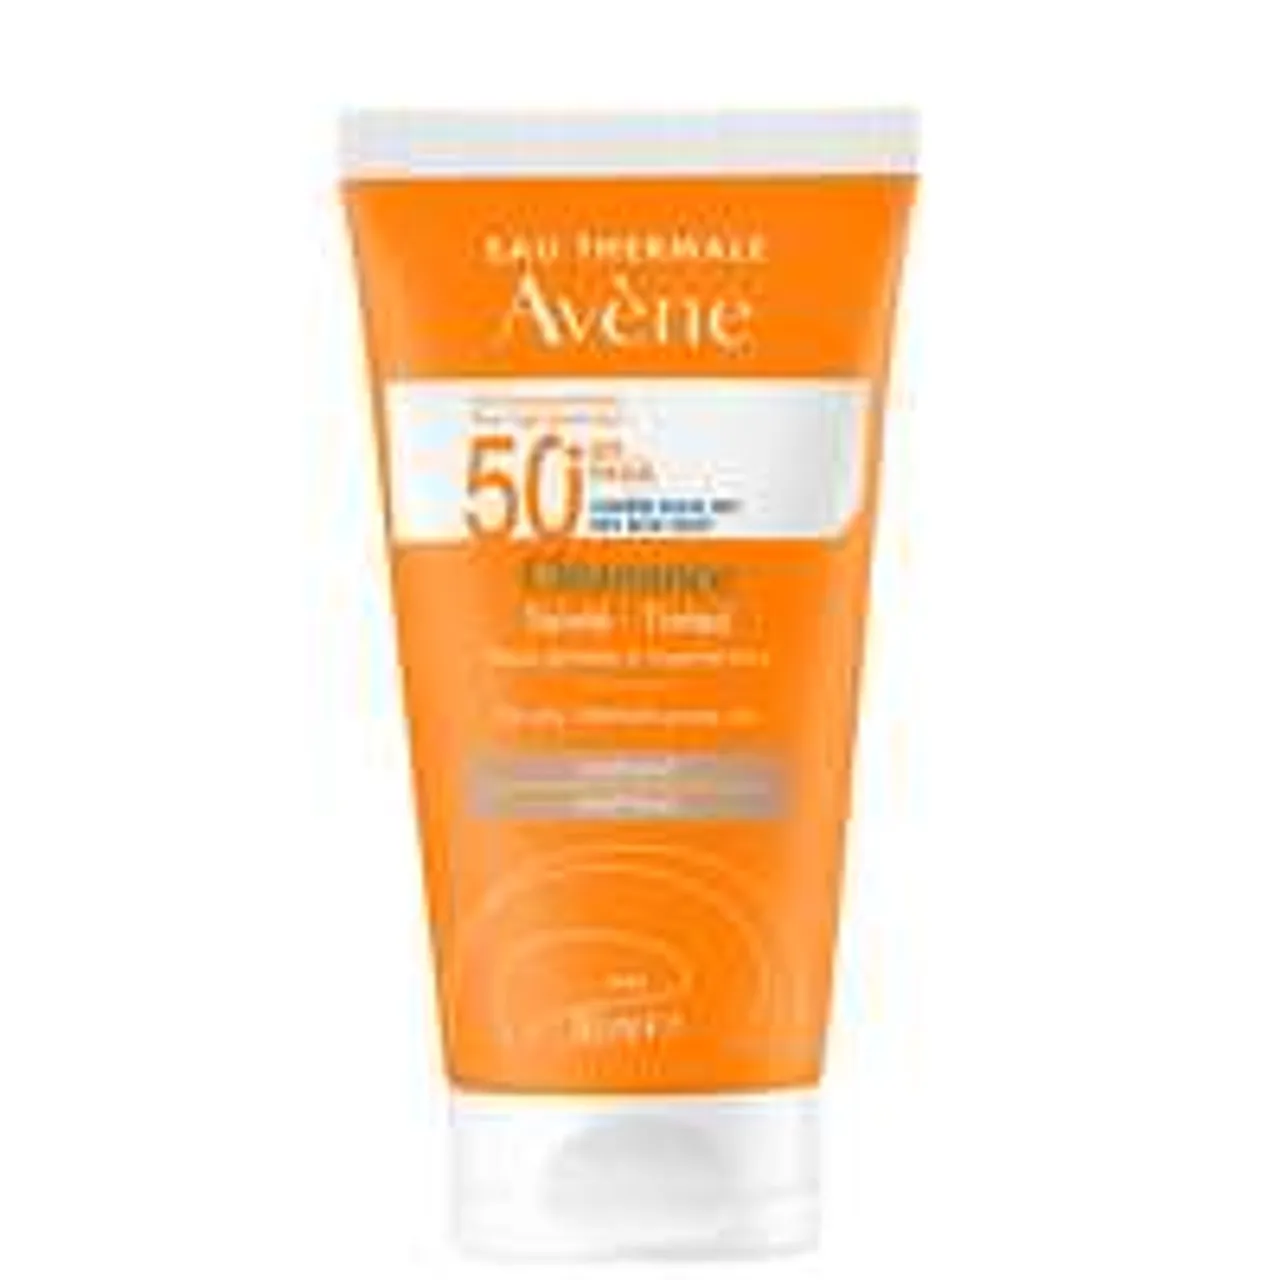 Avene Suncare Very High Protection Cleanance Tinted SPF50+ Sun Cream for Blemish-Prone Skin 50ml